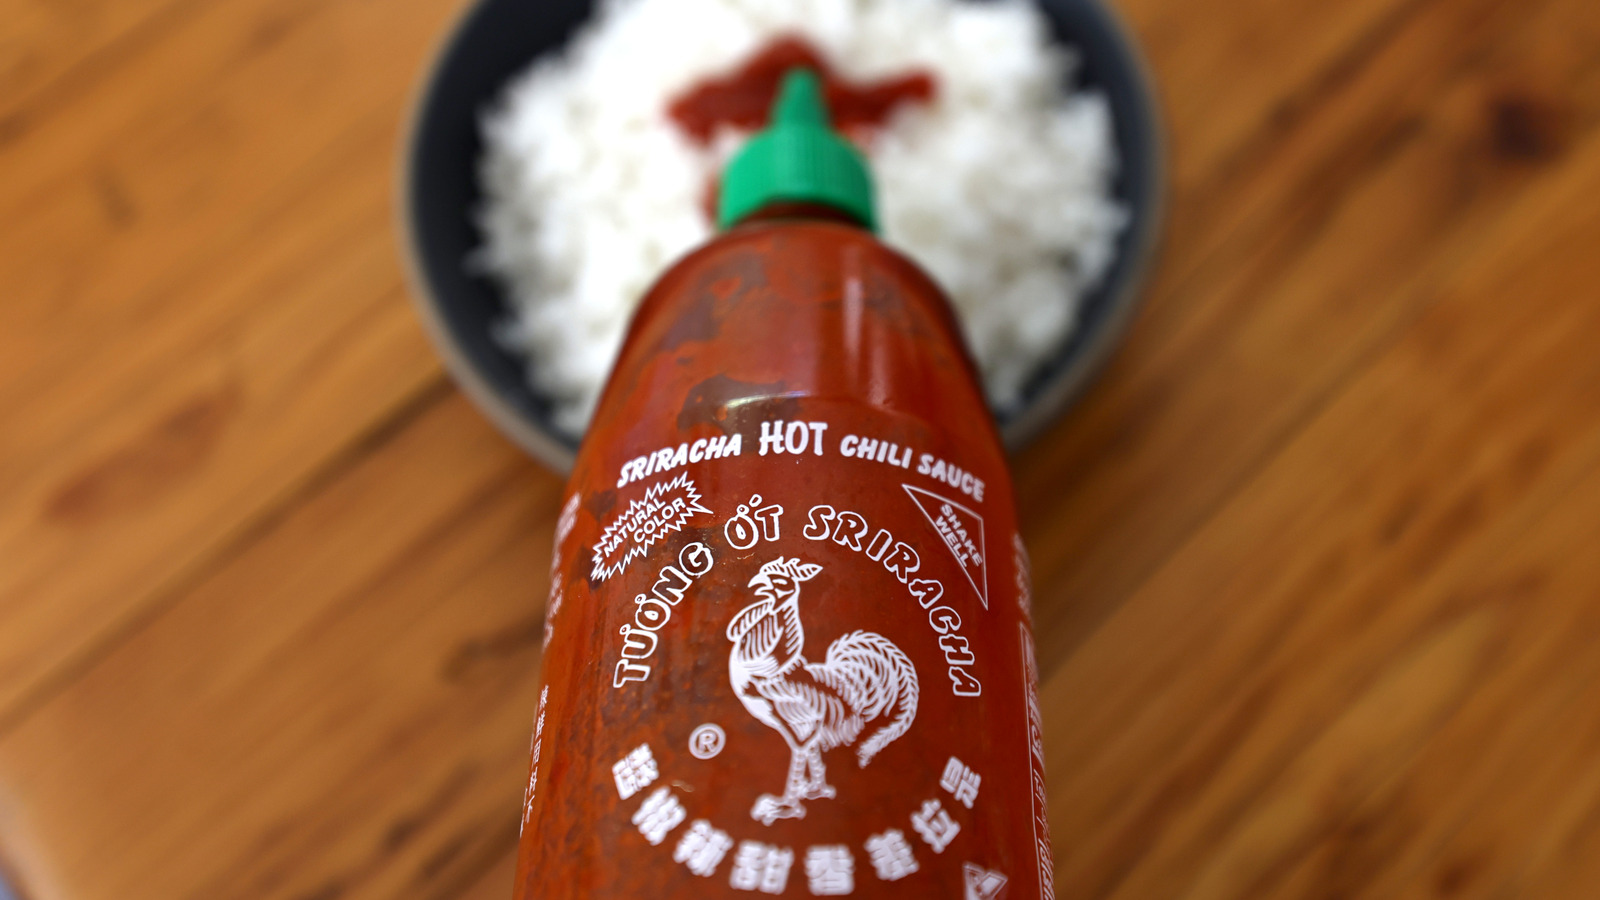 Weak Knees Gochujang Sriracha Sauce For Dipping, Marinading